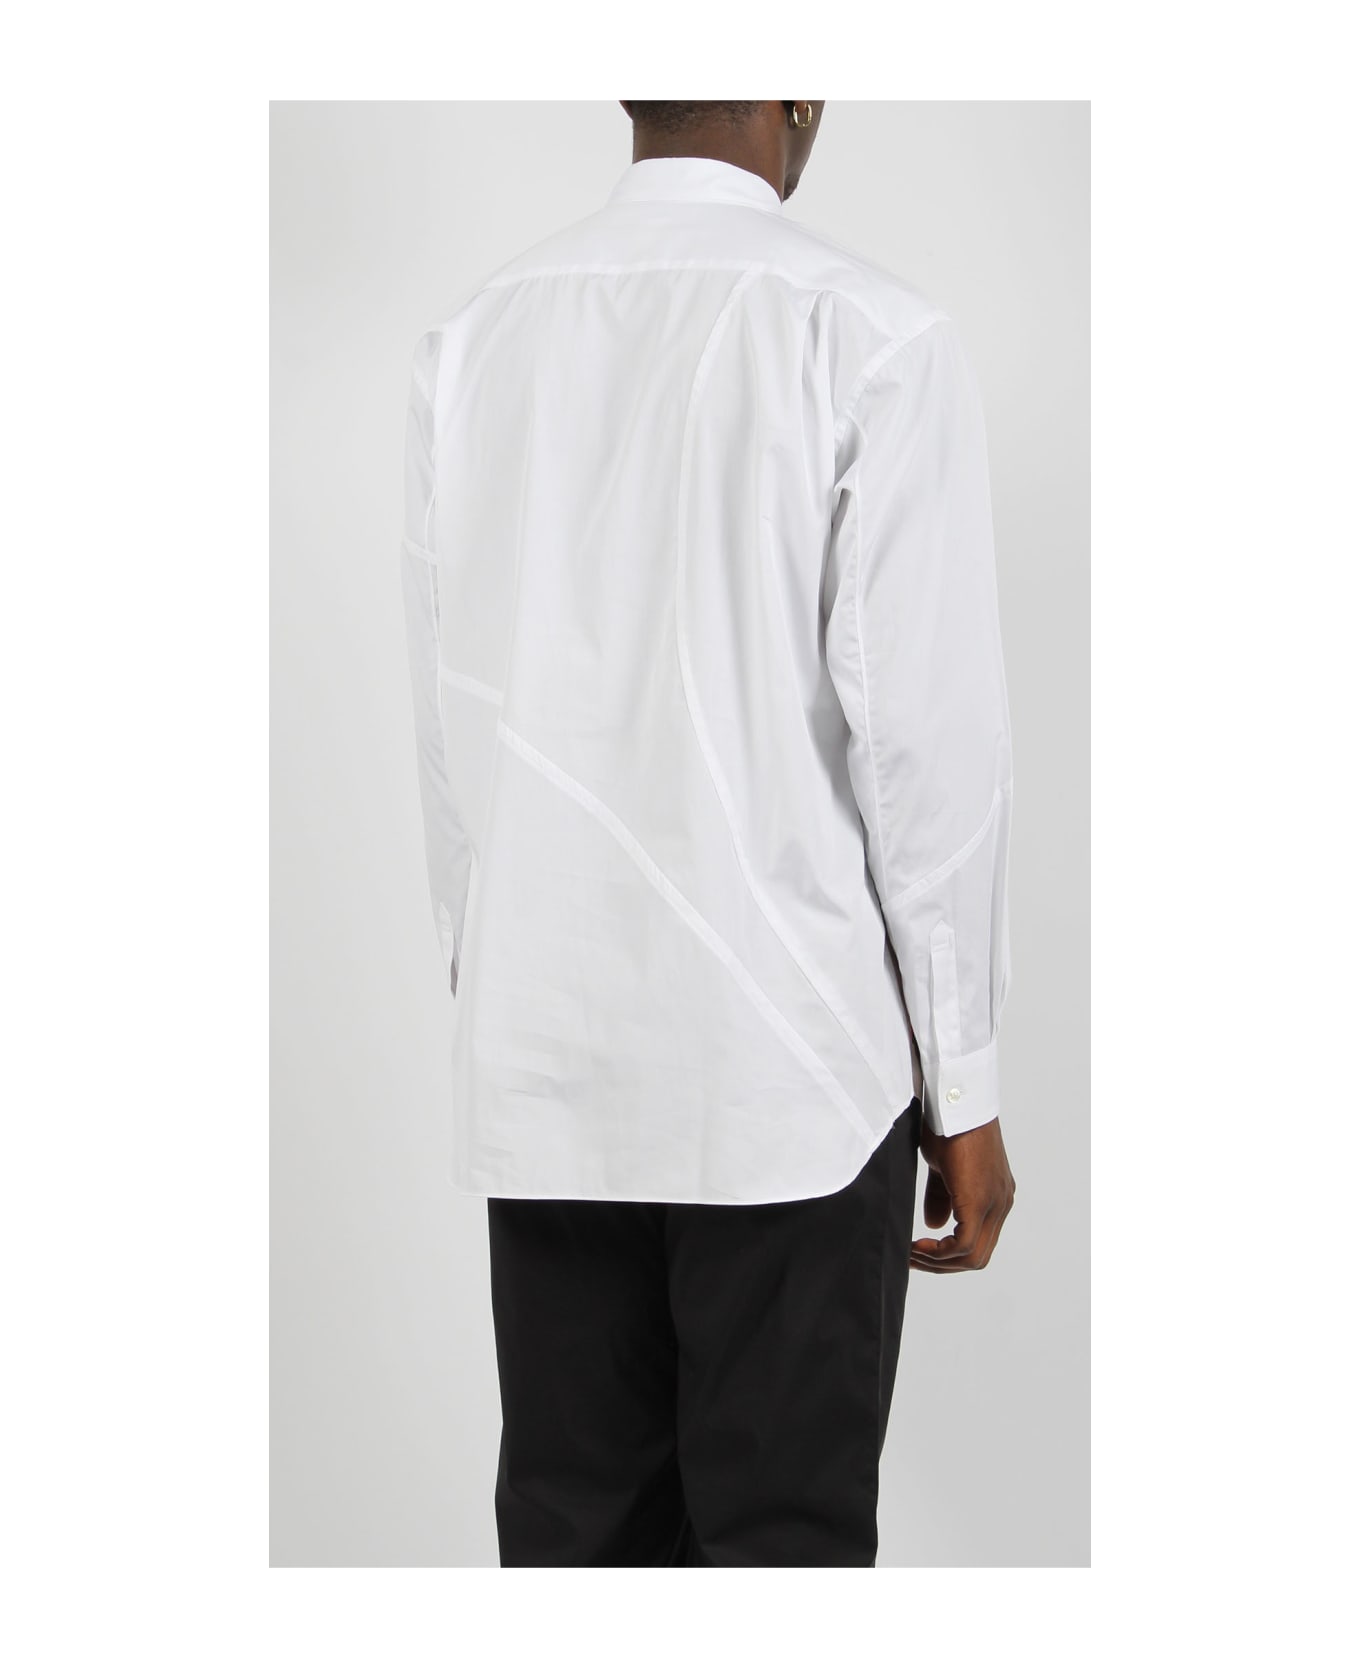 Comme des Garçons Shirt Andy Warhol Shirt - White シャツ